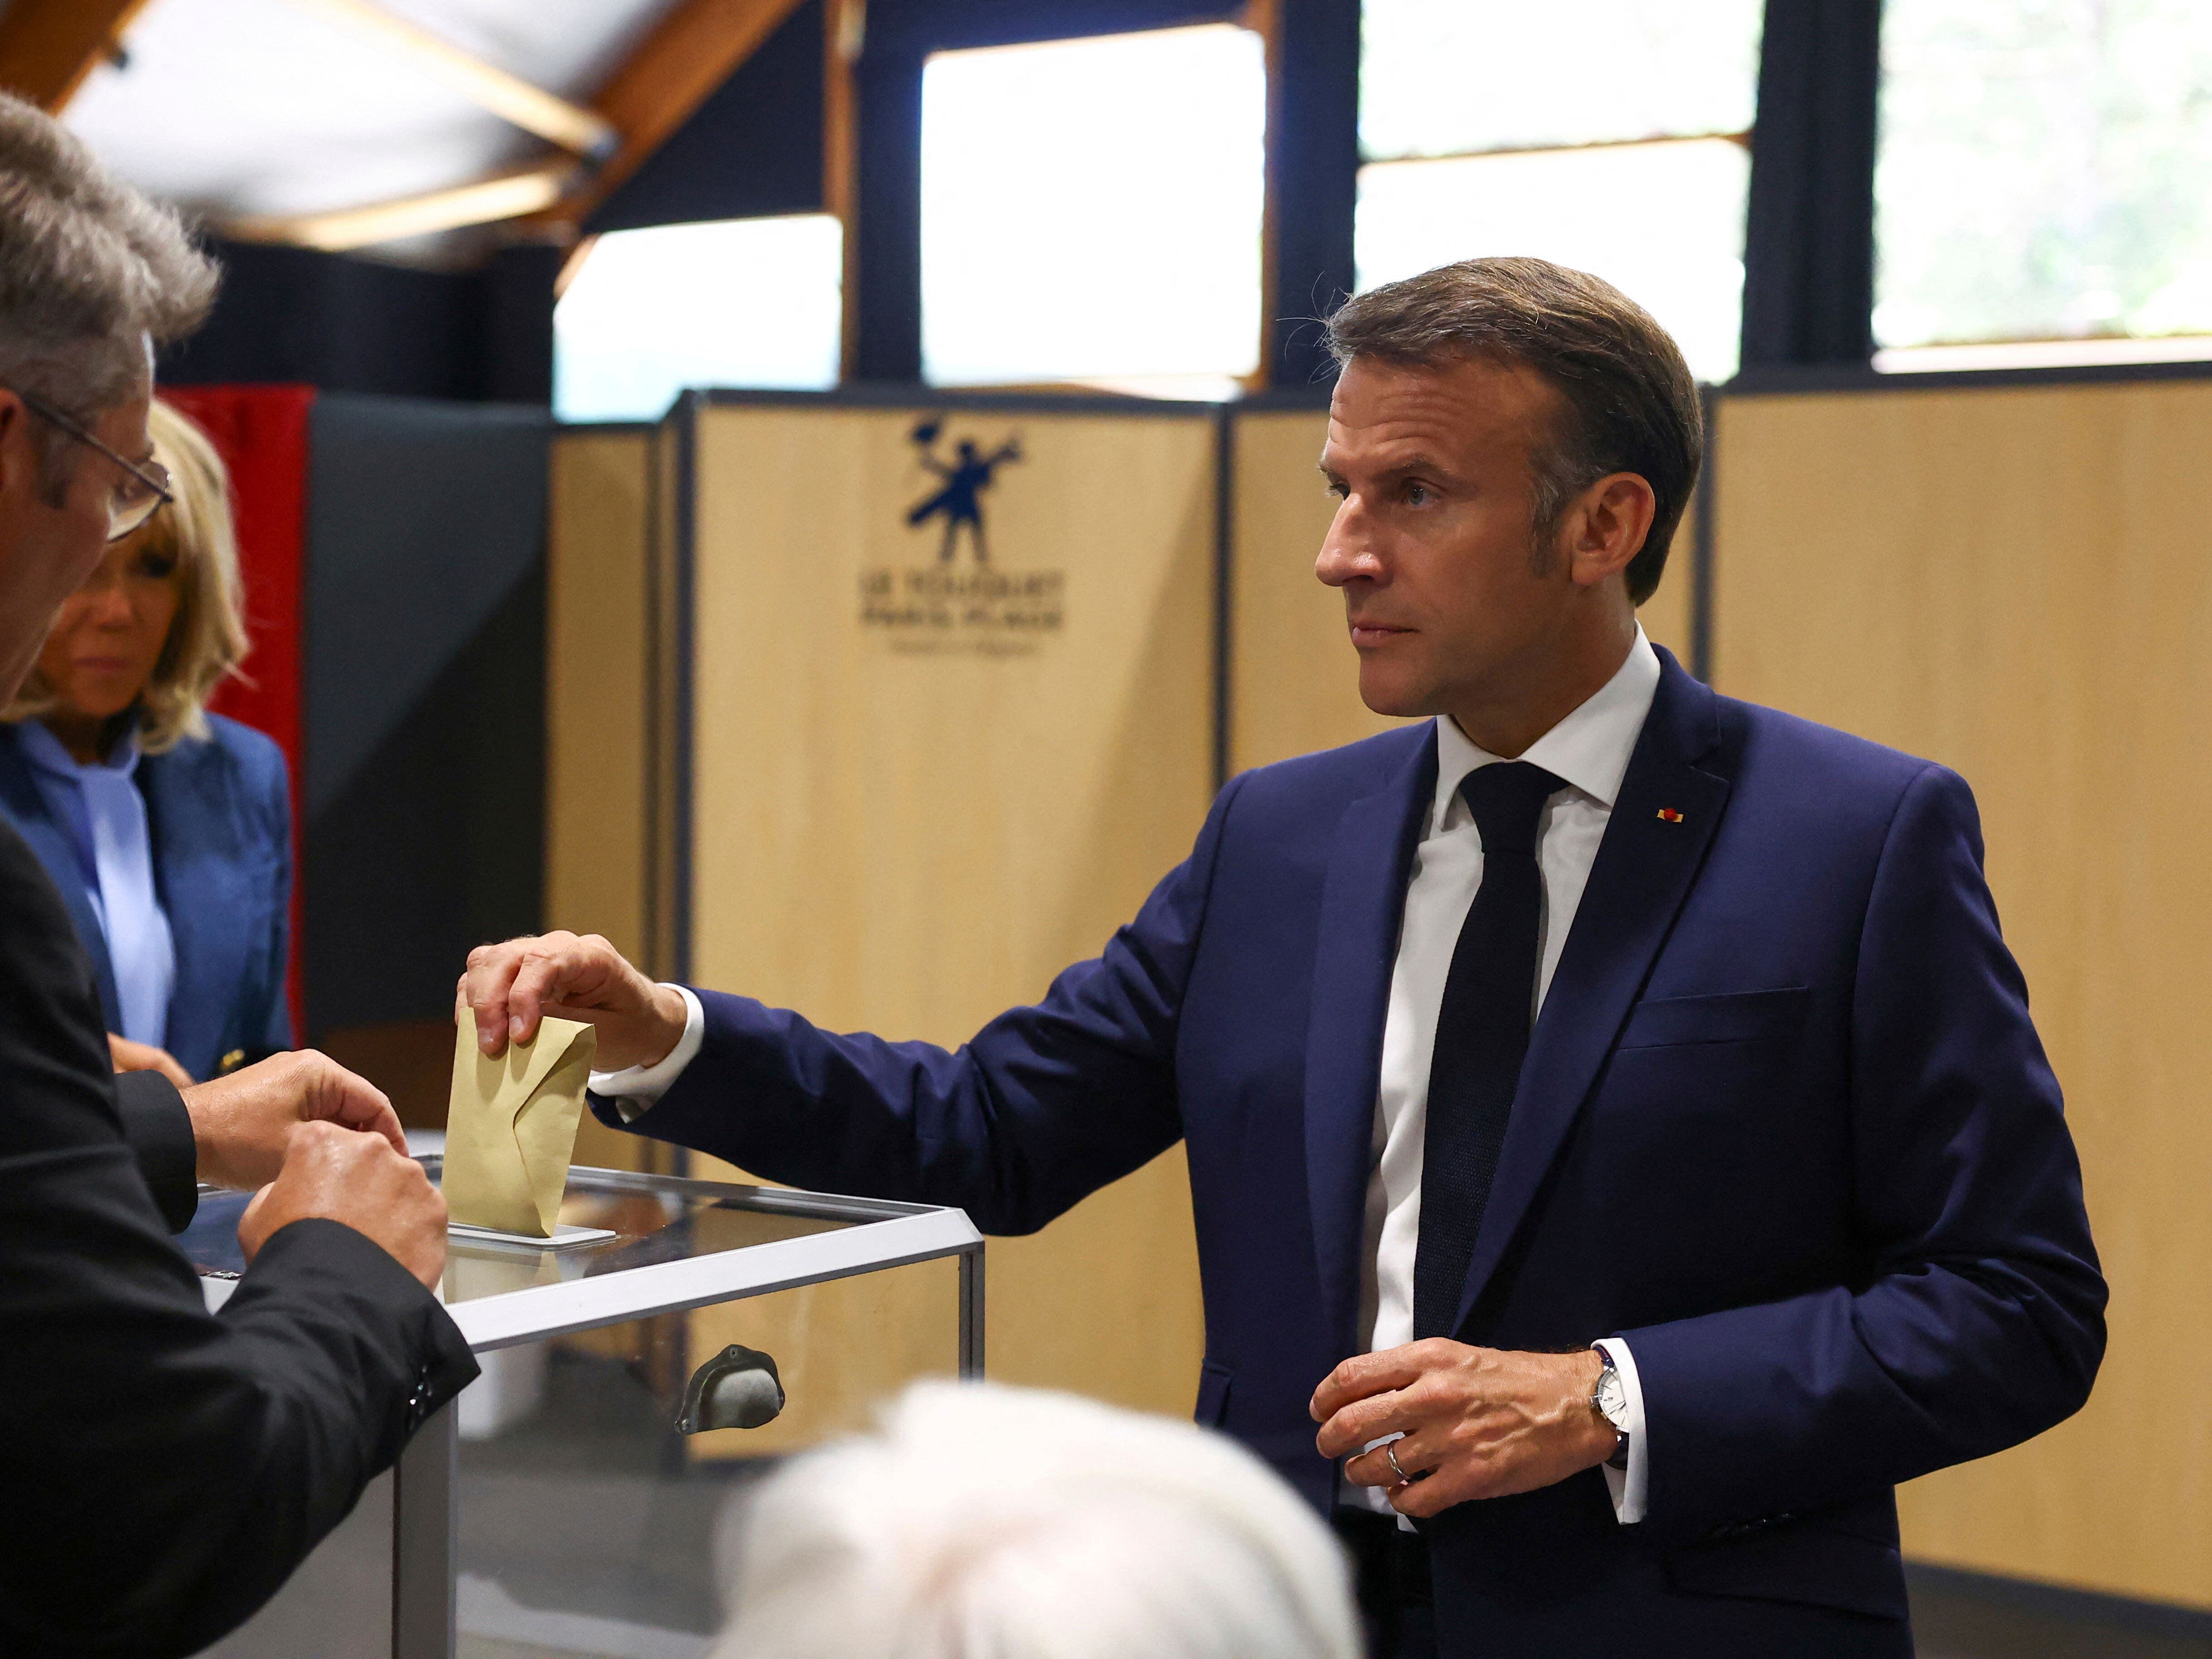 Emmanuel Macron dissolves France’s National Assembly after poll blow